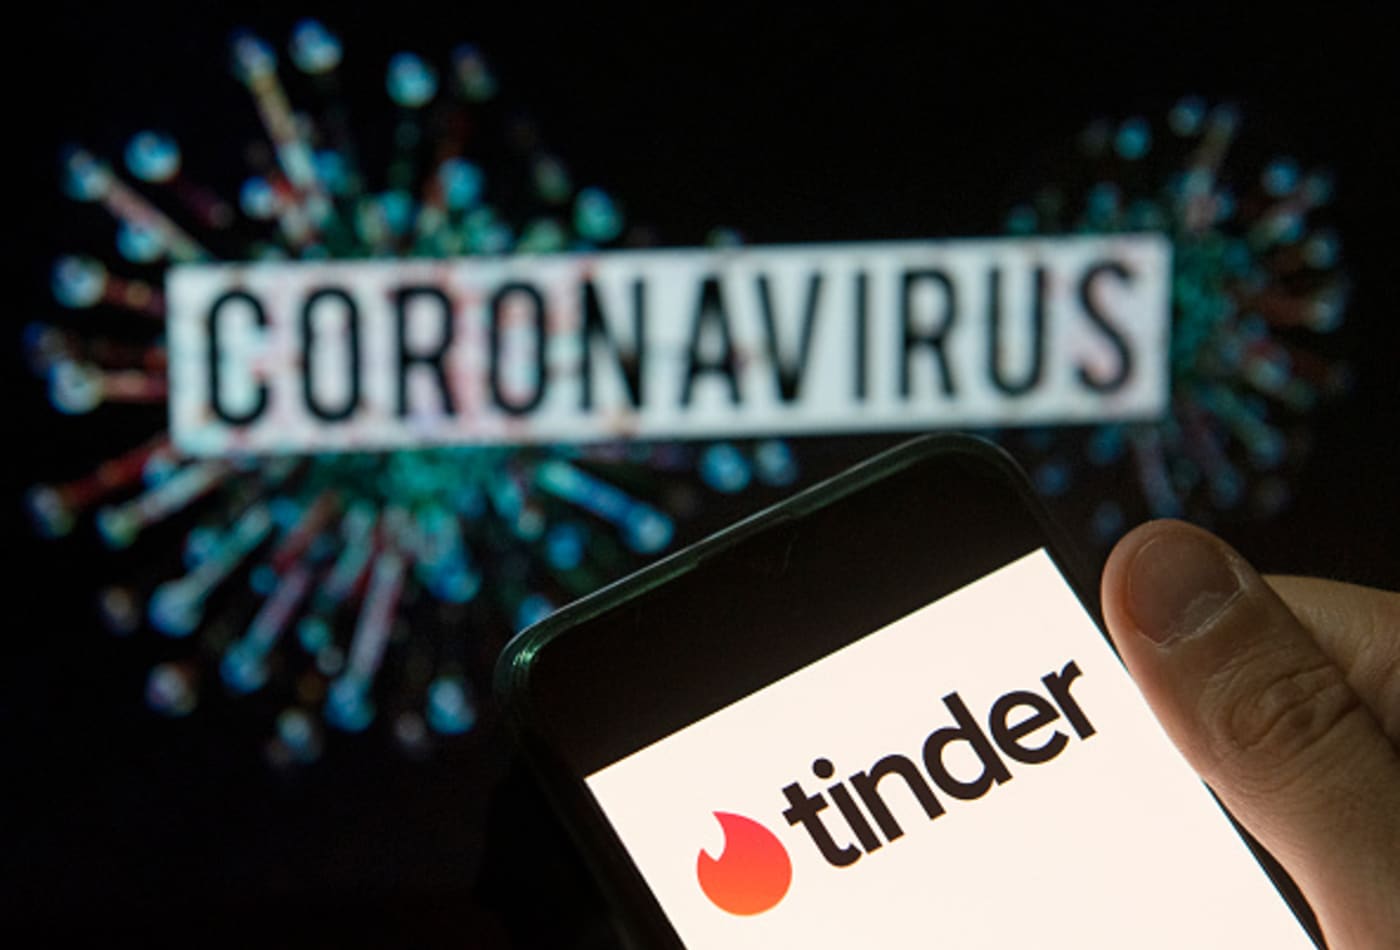 Tinder have high Server Load due to Coronavirus Lockdown